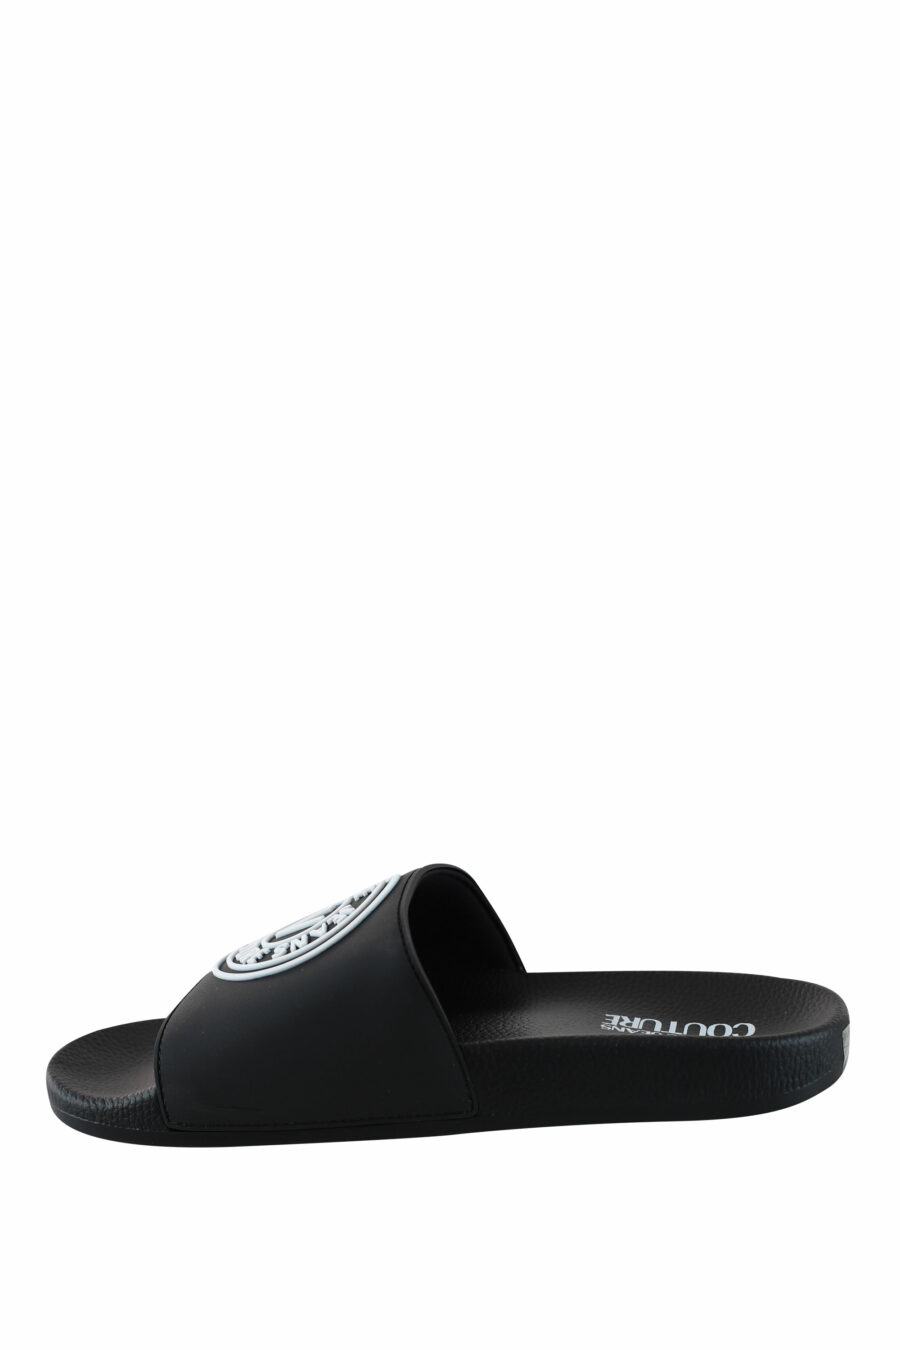 Black flip flops with black circular maxilogo - IMG 4429